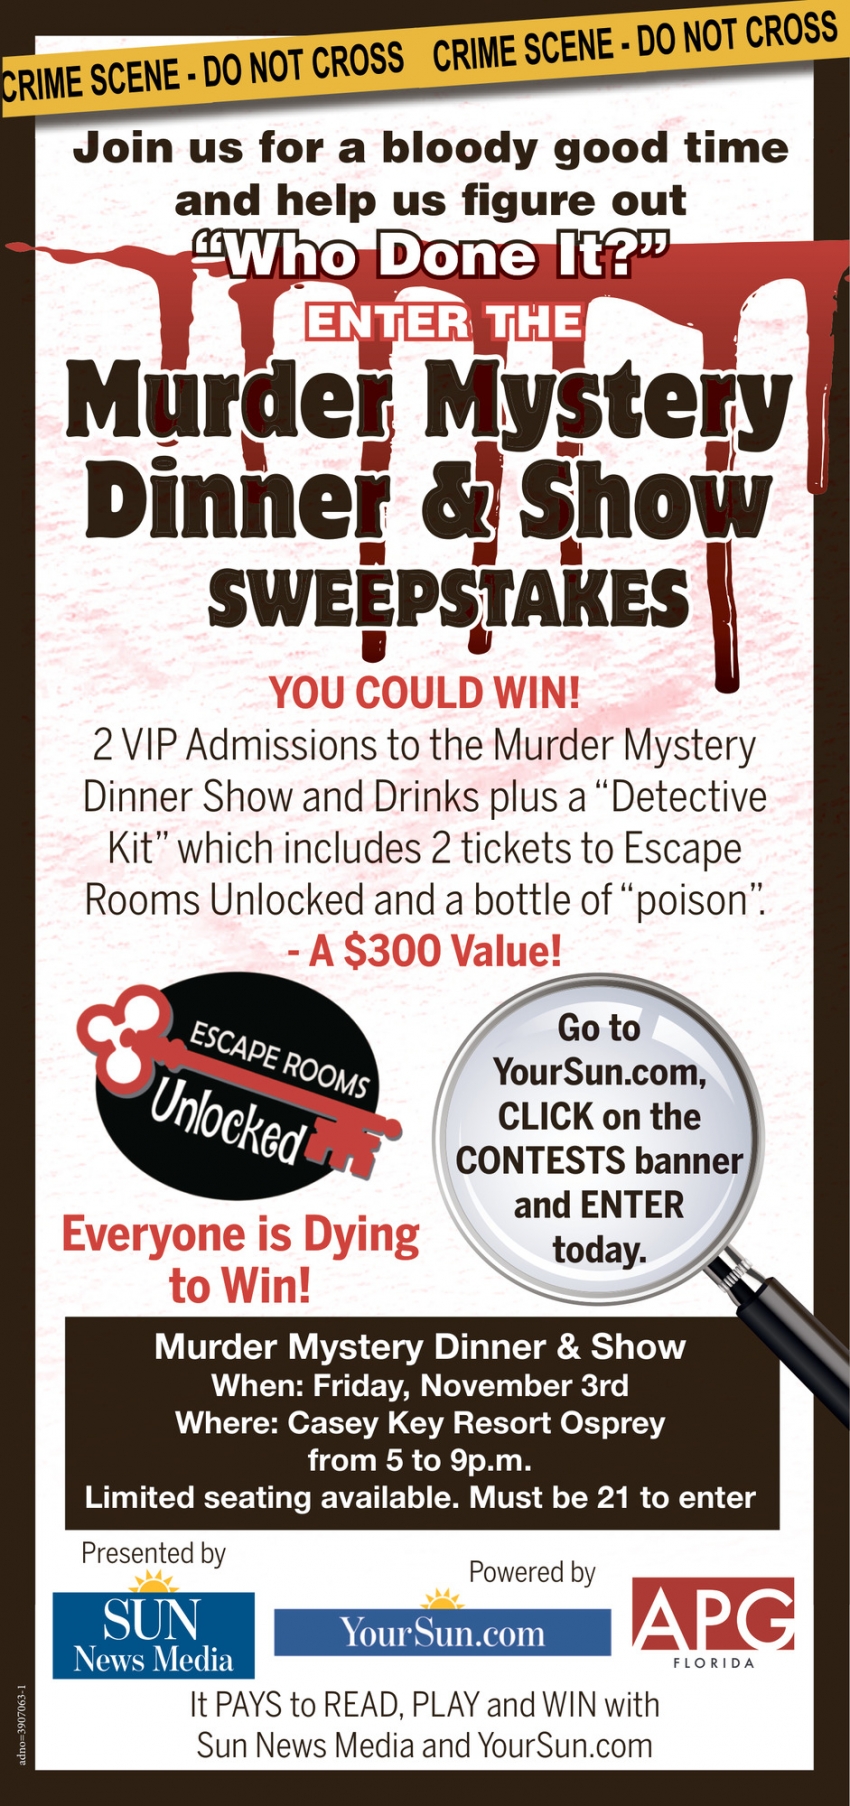 Murder Mystery Dinner - Nov 2 (SOLD OUT)